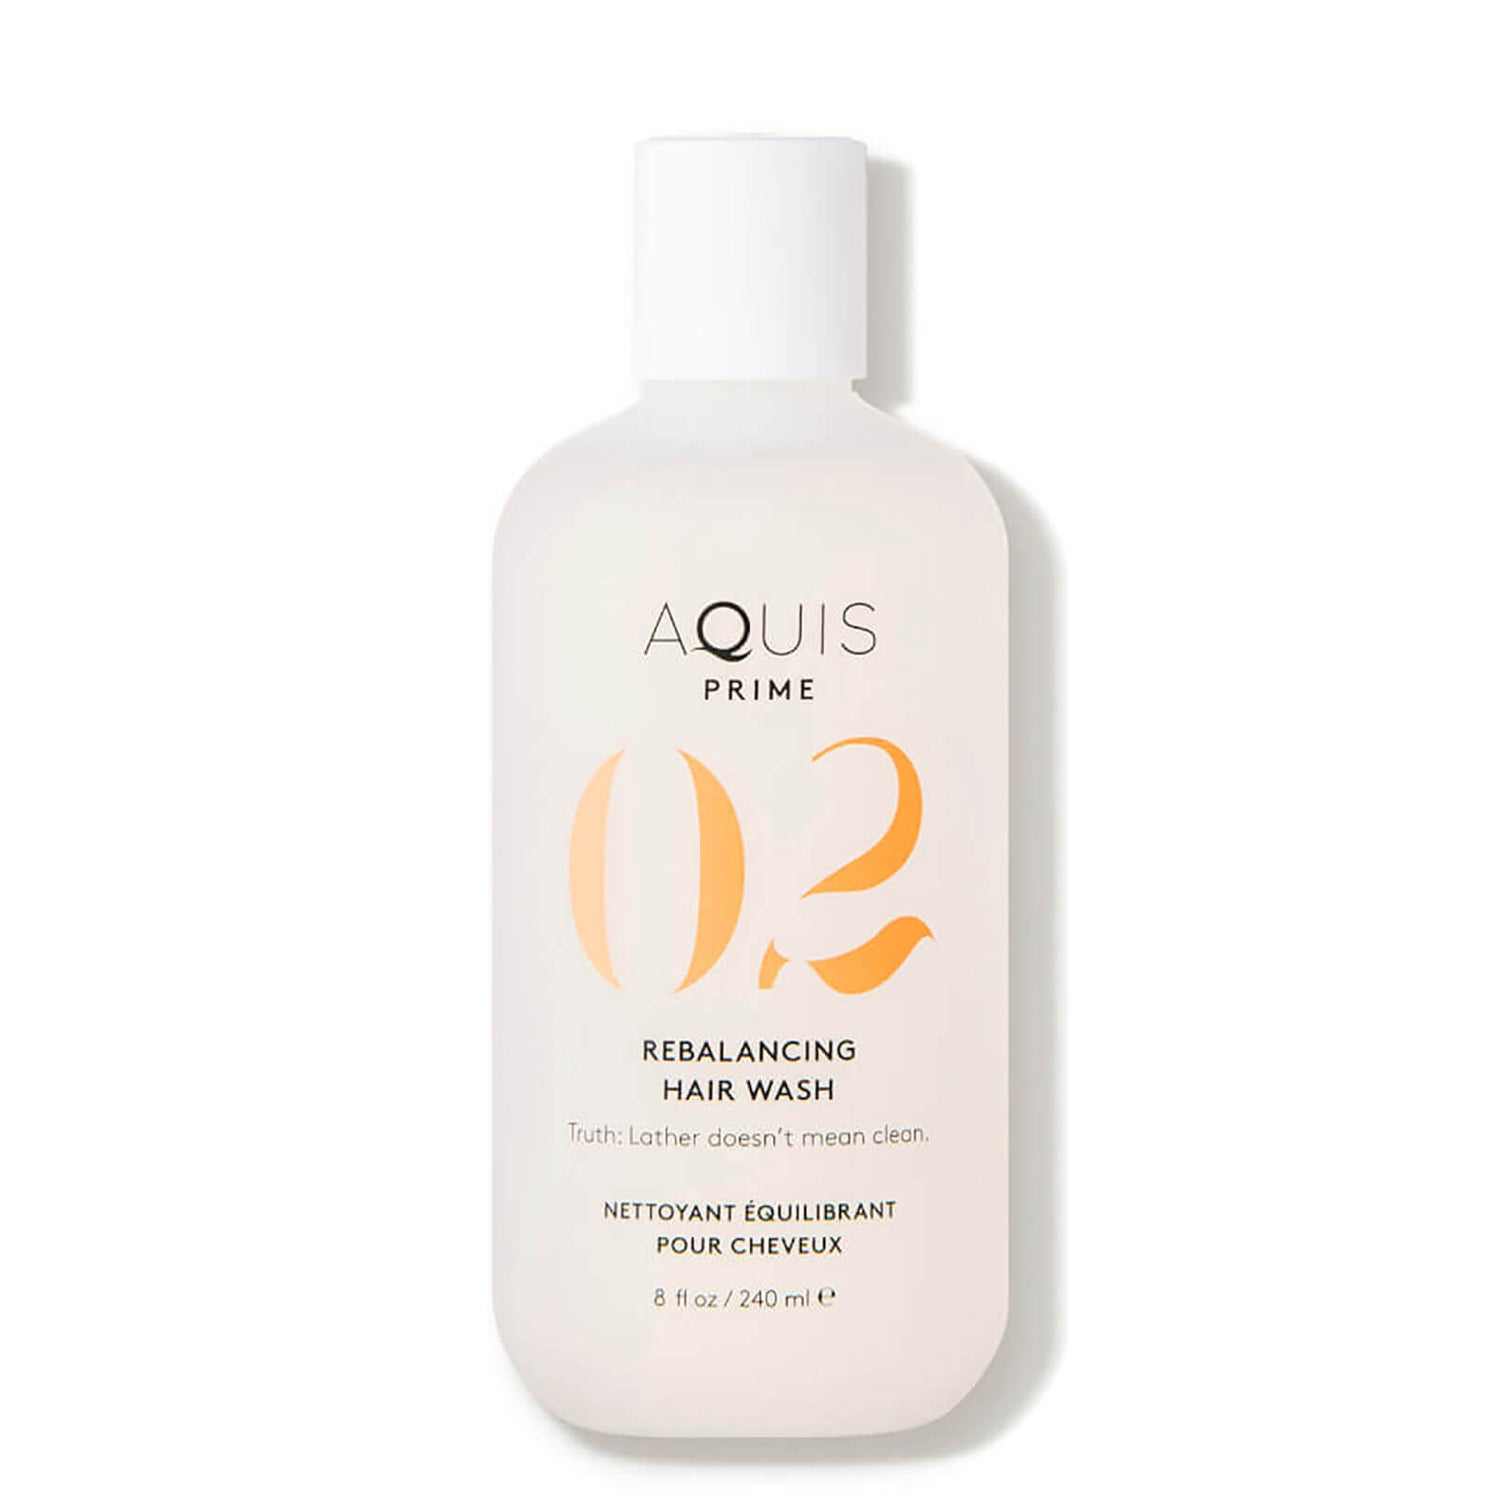 Aquis Prime Rebalancing Hair Wash (8 fl. oz.)